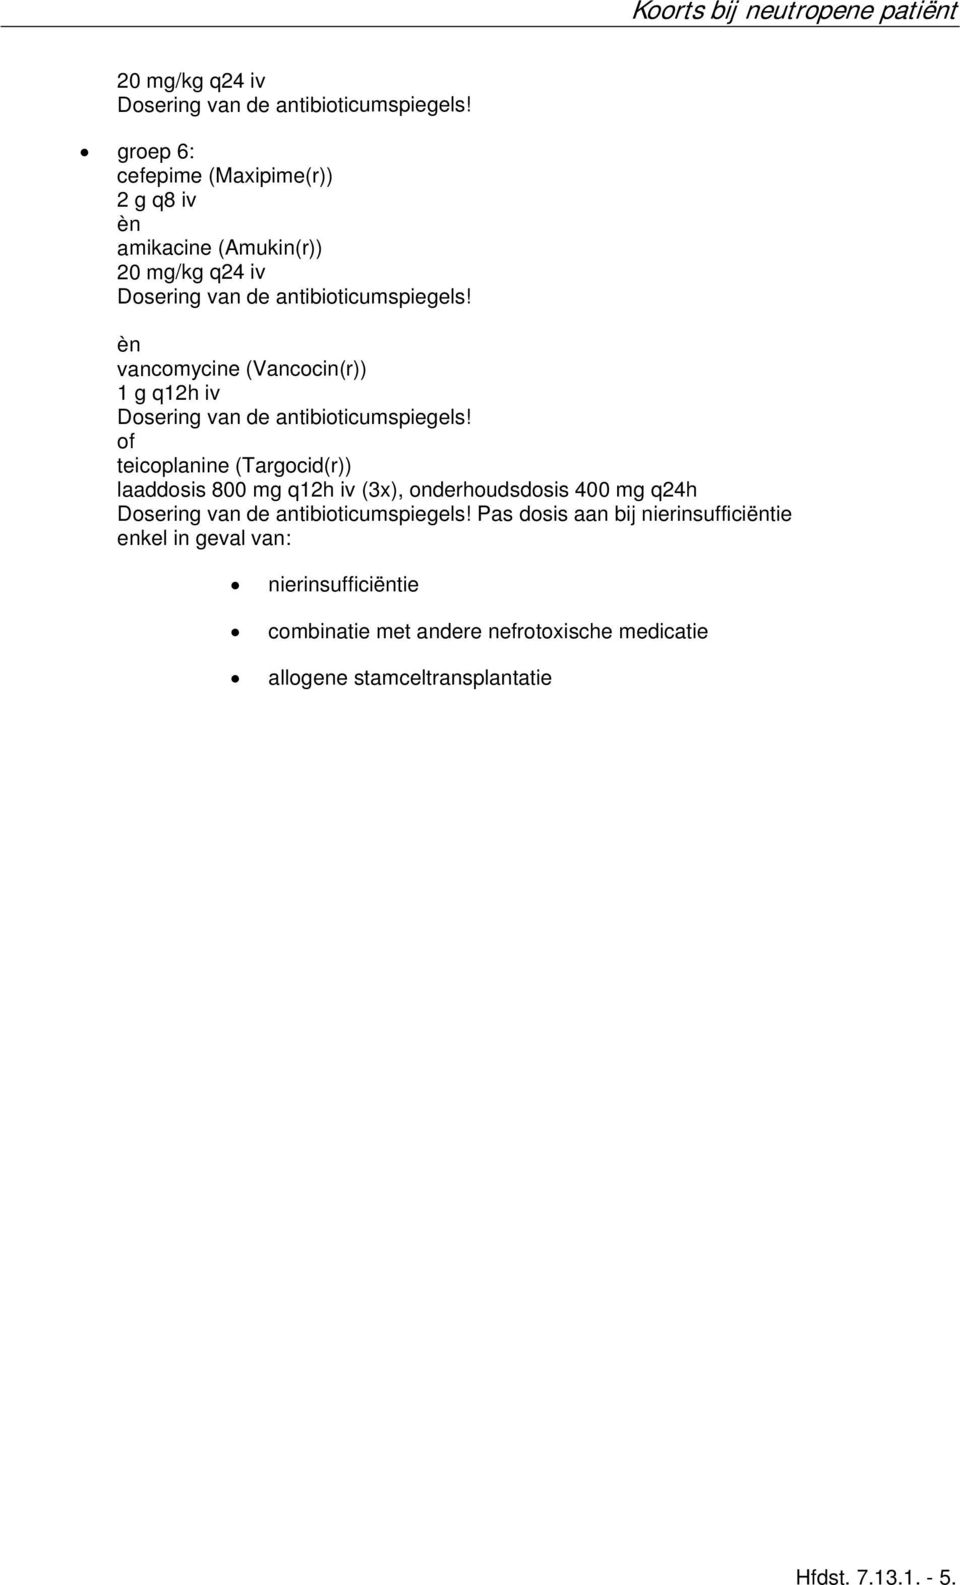 onderhoudsdosis 400 mg q24h Pas dosis aan bij nierinsufficiëntie enkel in geval van: